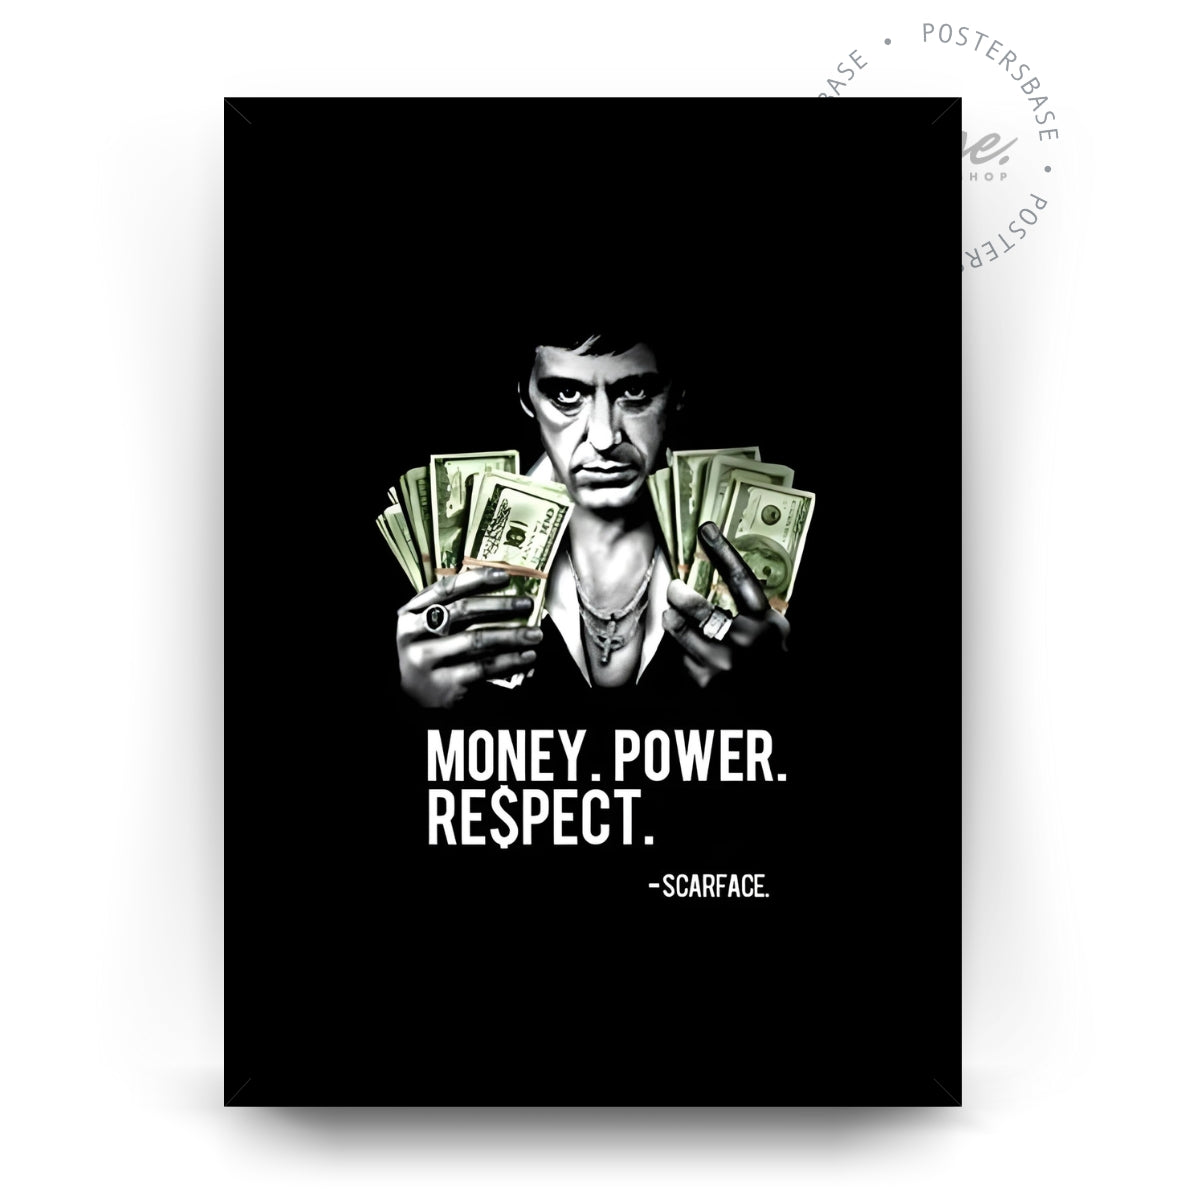 Scarface 'Money Power Respect'